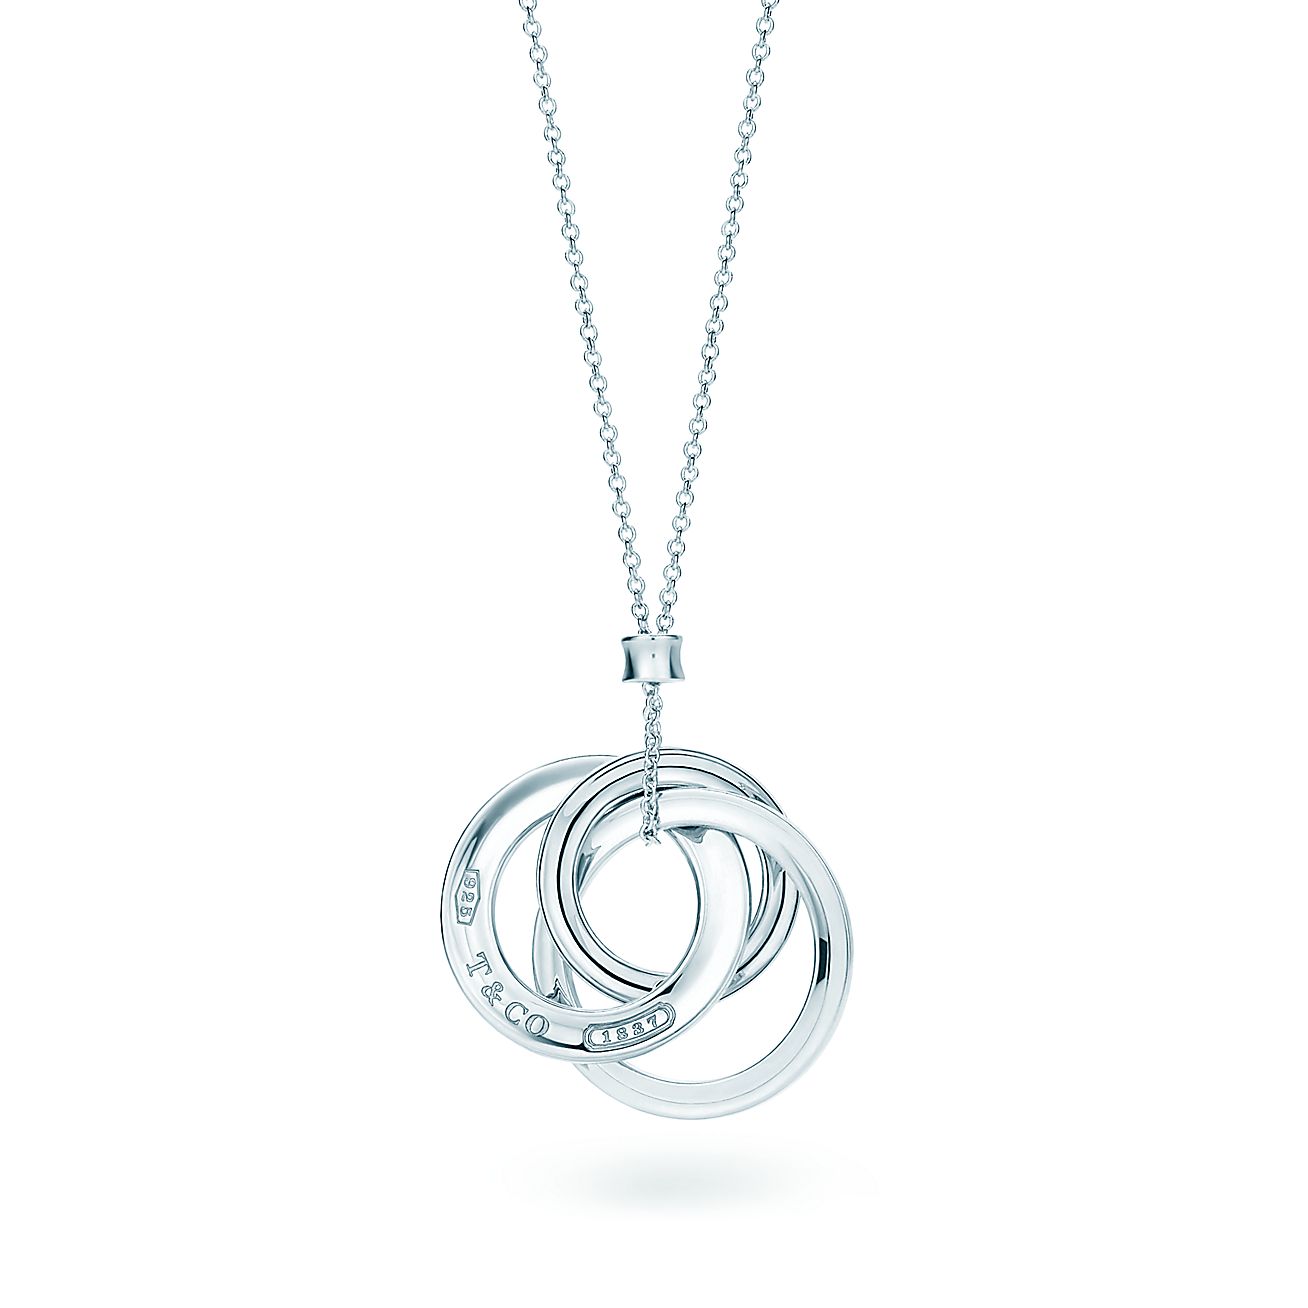 Tiffany 1837™ interlocking circles pendant on a 18